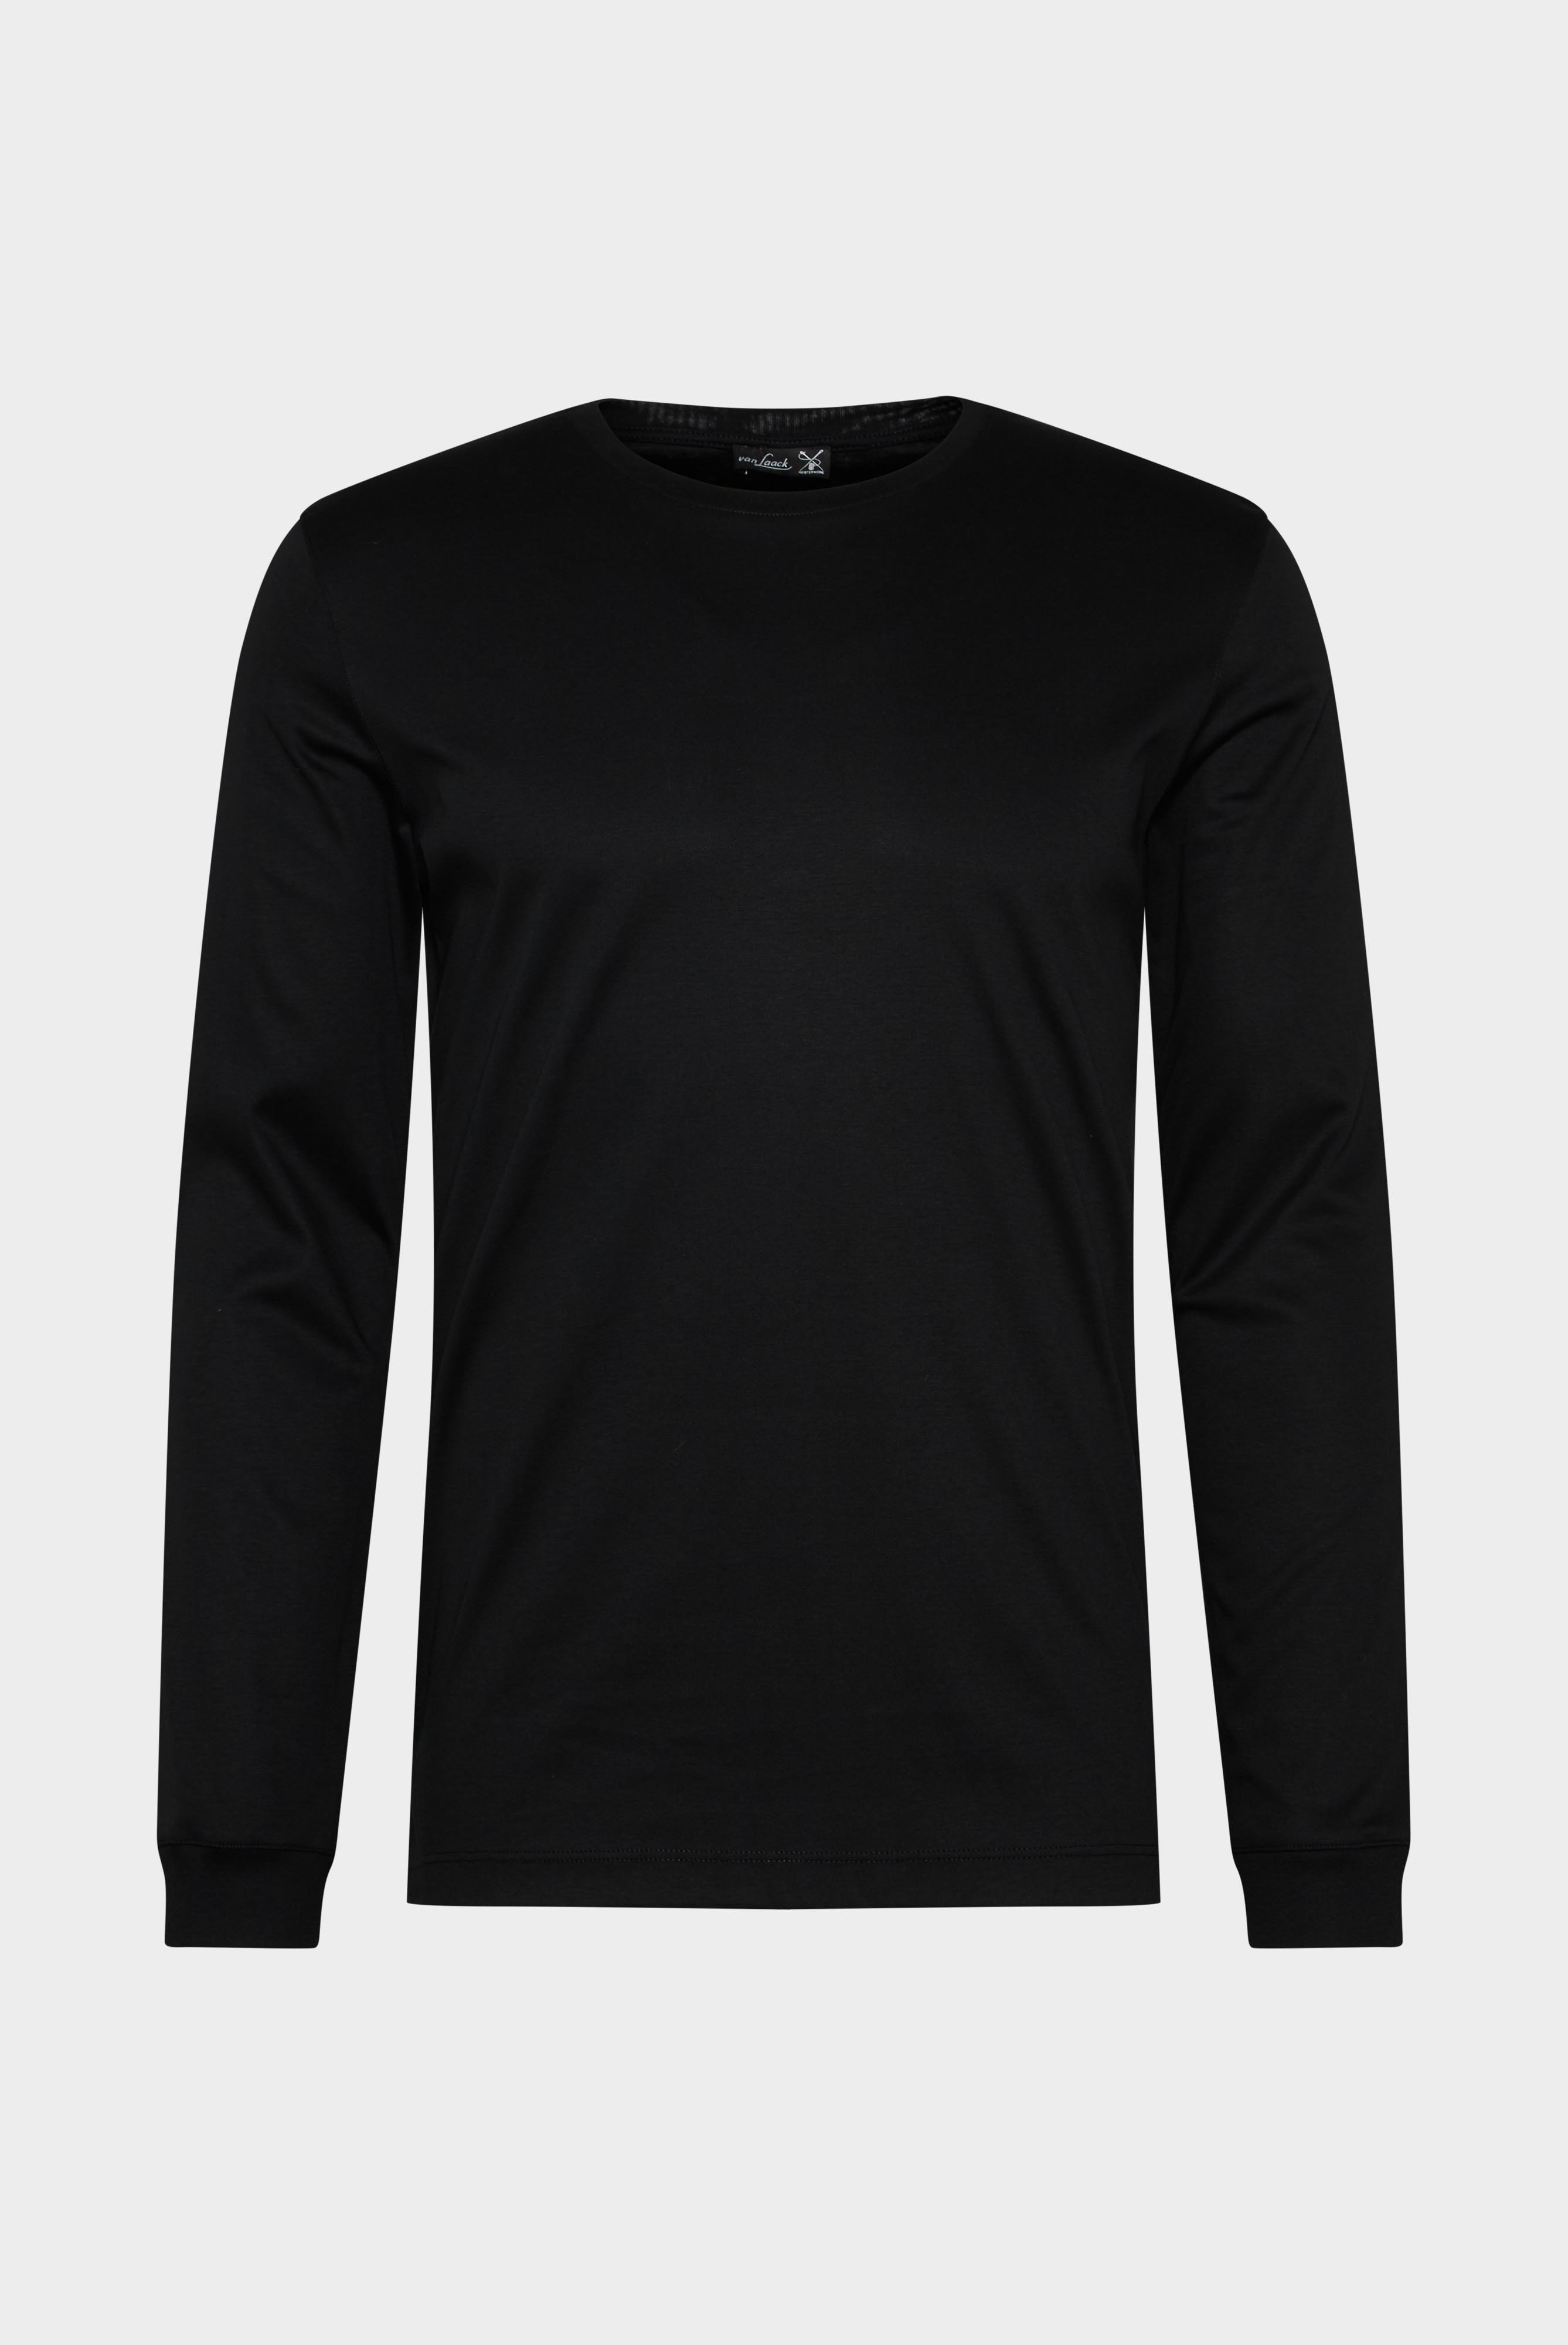 T-Shirts+Langarm Jersey T-Shirt mit Rundhals Slim Fit+20.1718.UX.180031.099.XL